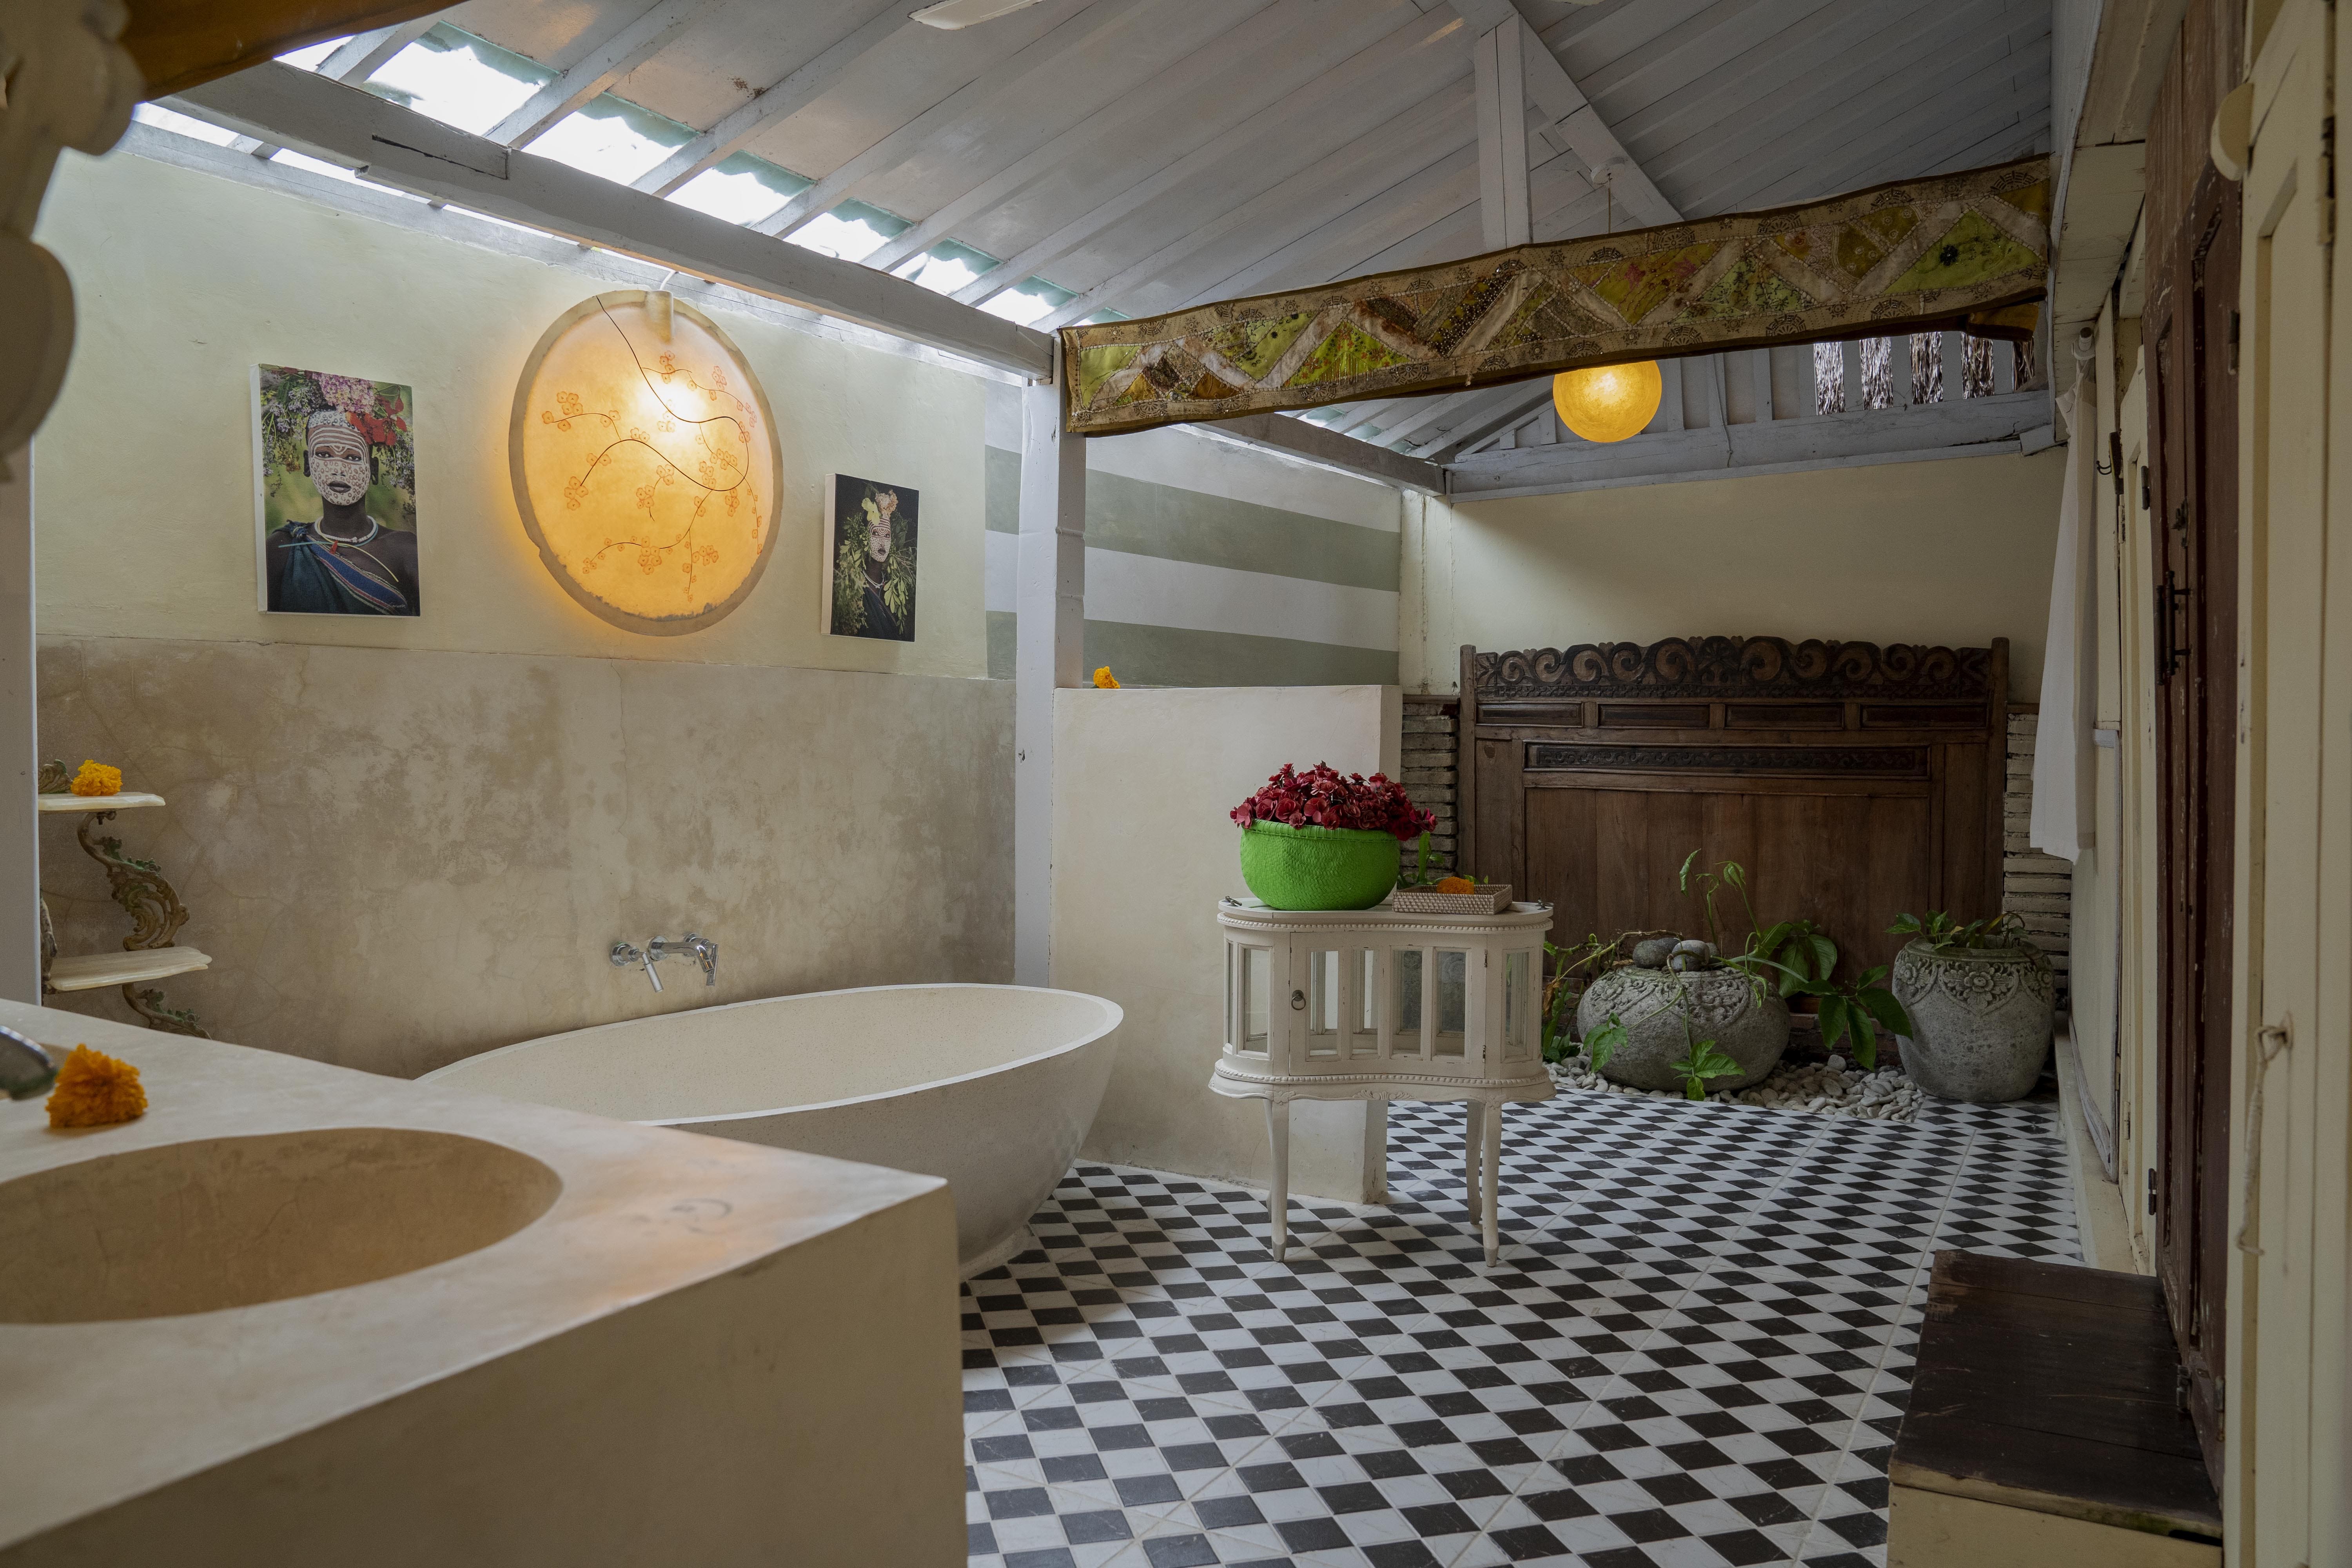 Sumatra Bathroom